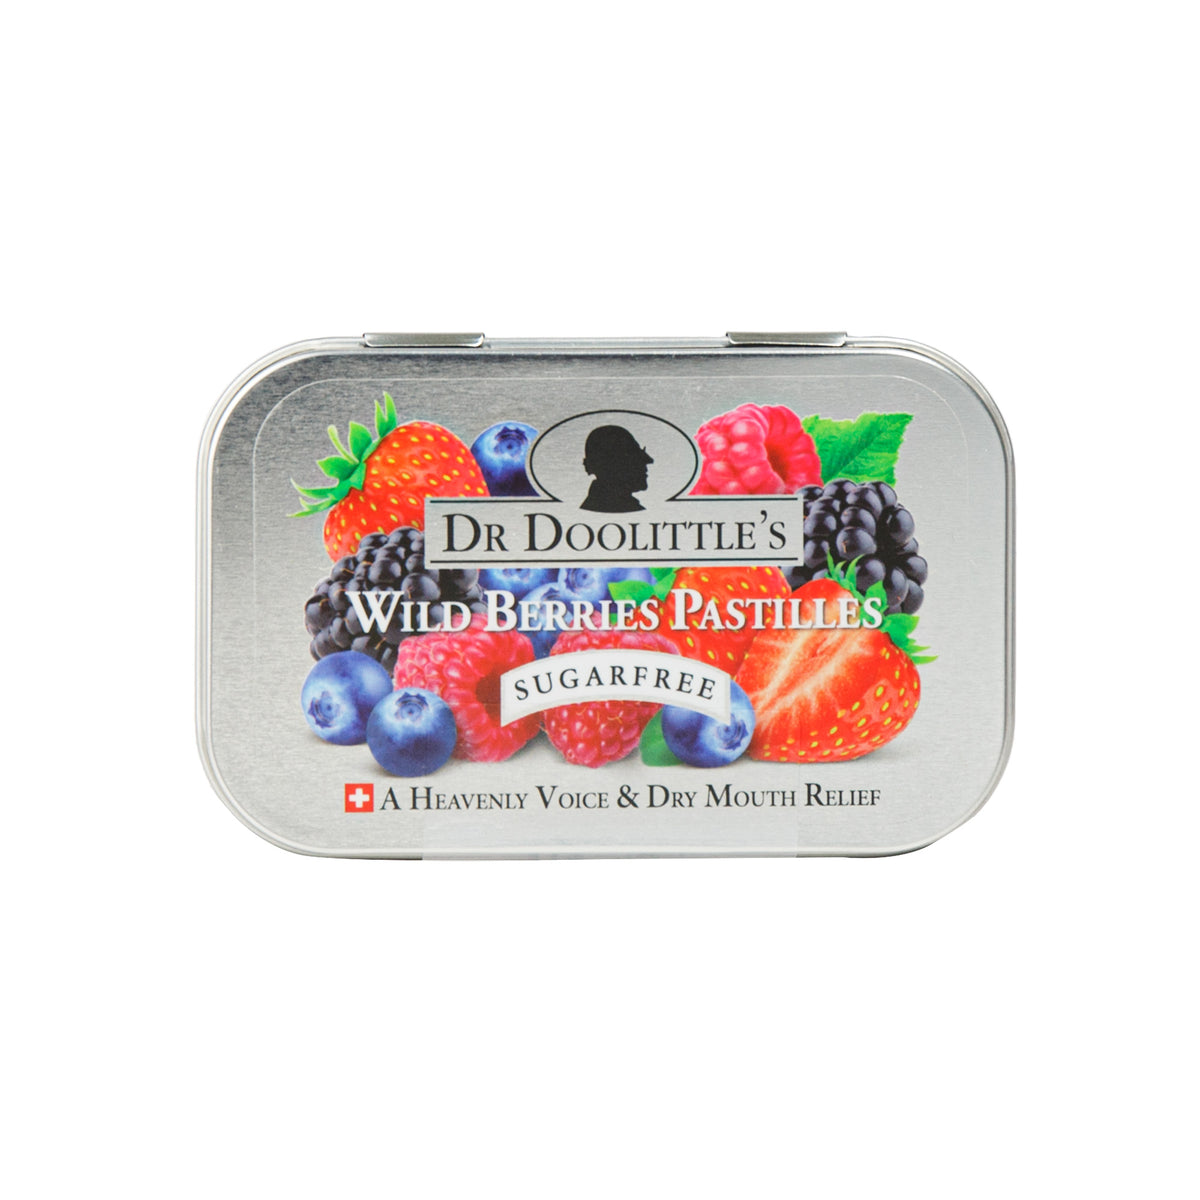 Primary image of Wild Berries Pastilles Sugar Free